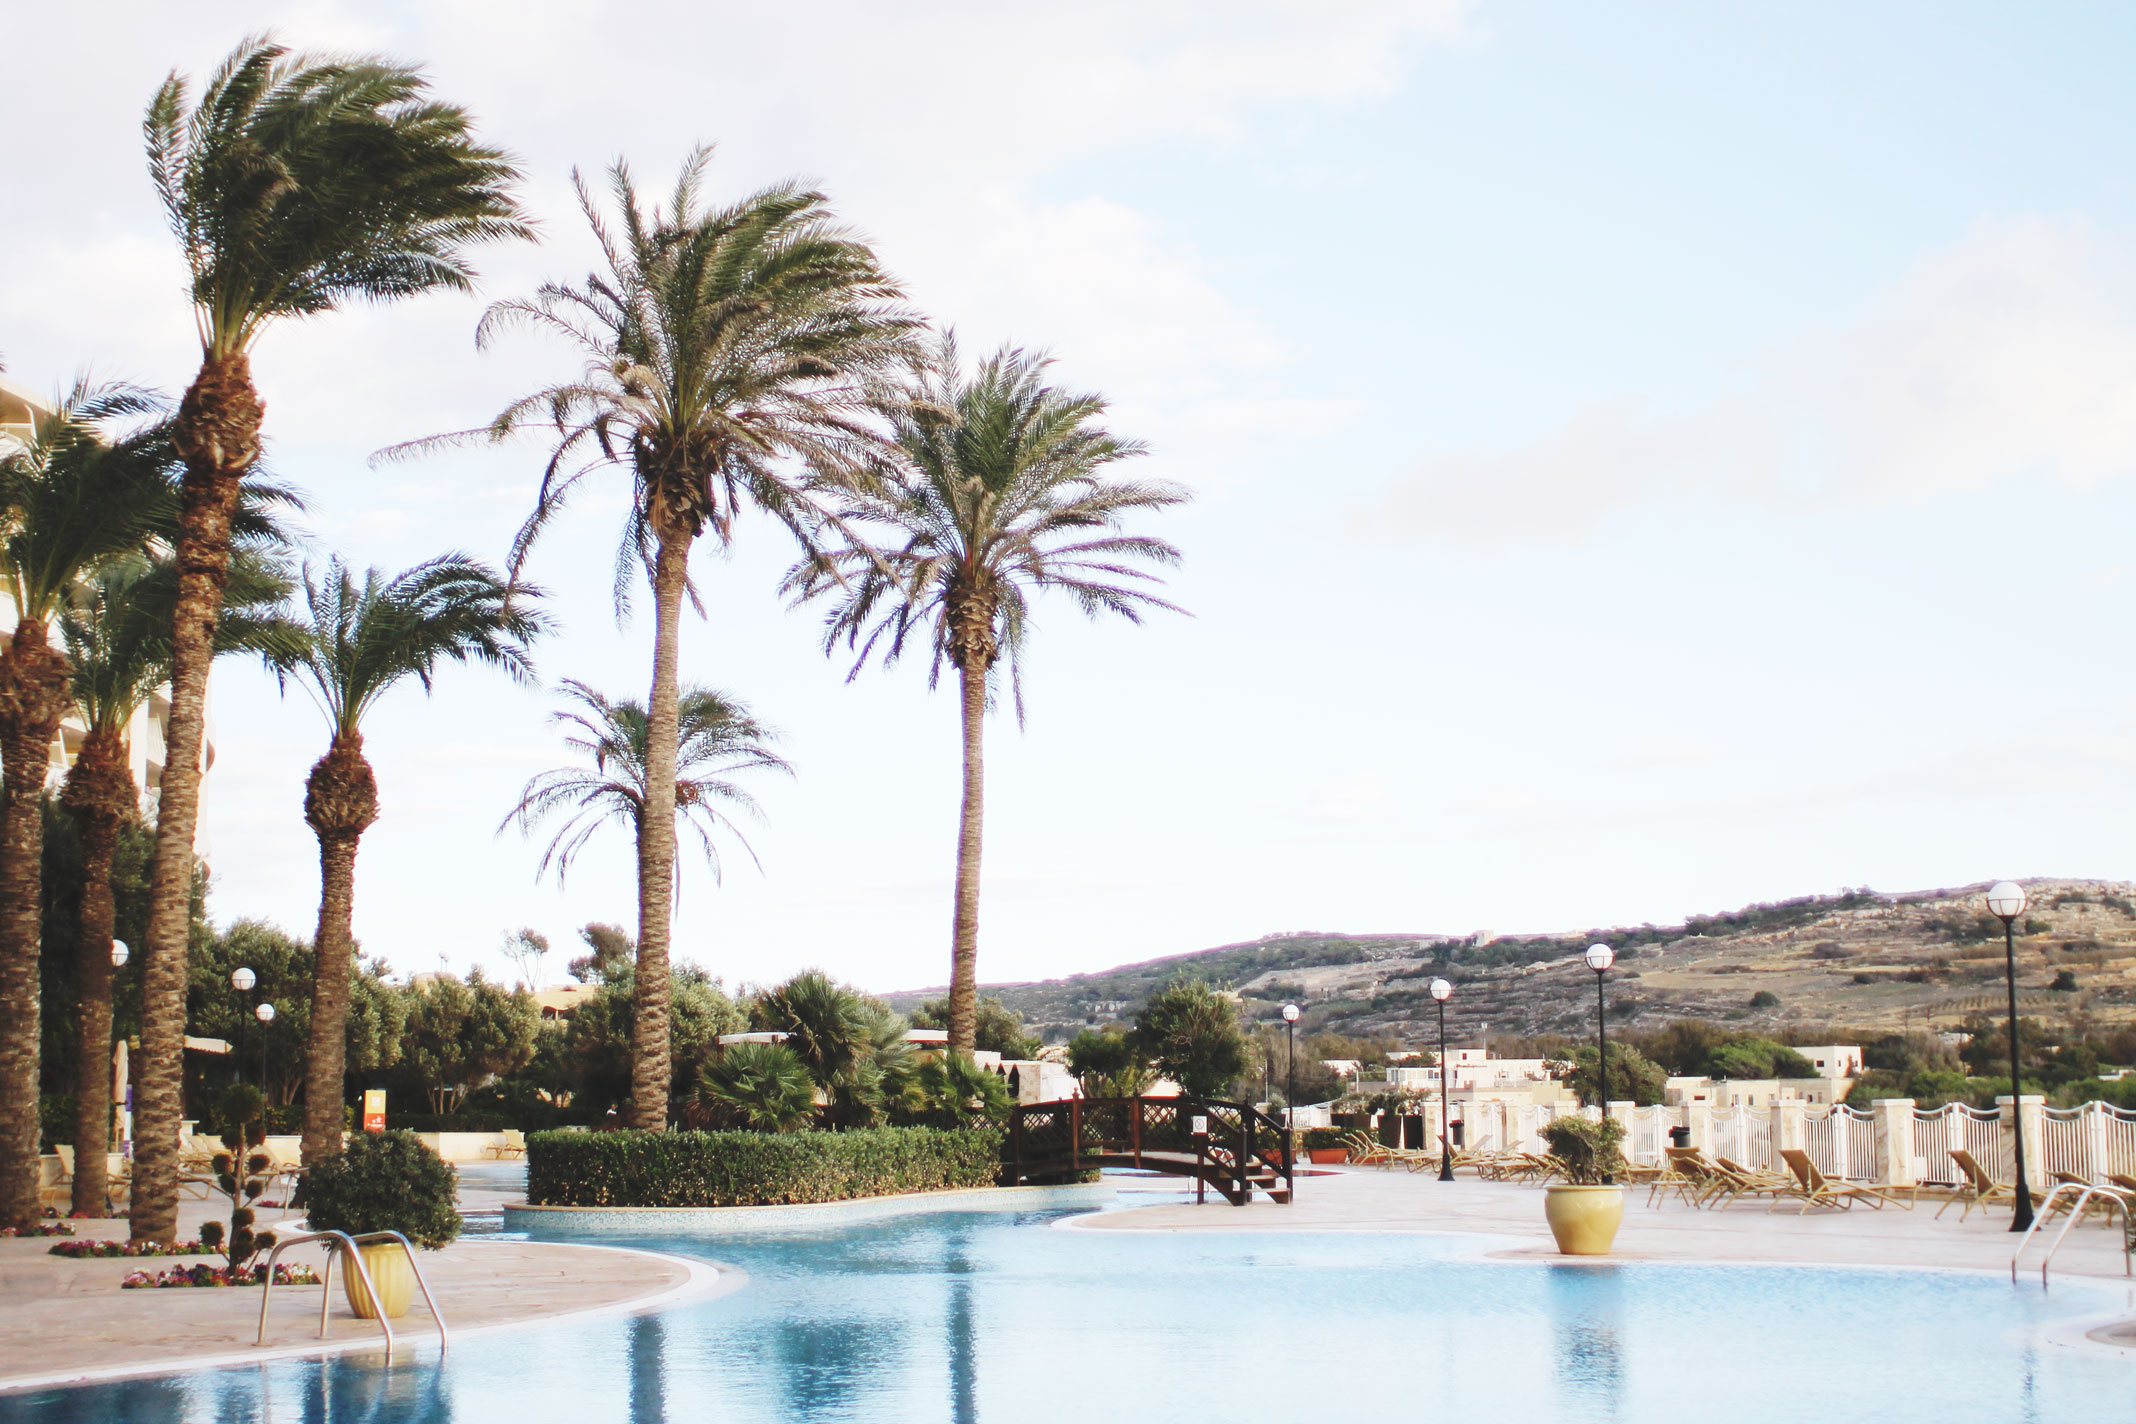 Styleat30 Travel Blog - Radisson Blu Resort & Spa, Malta, Golden Sands Hotel Review - 22